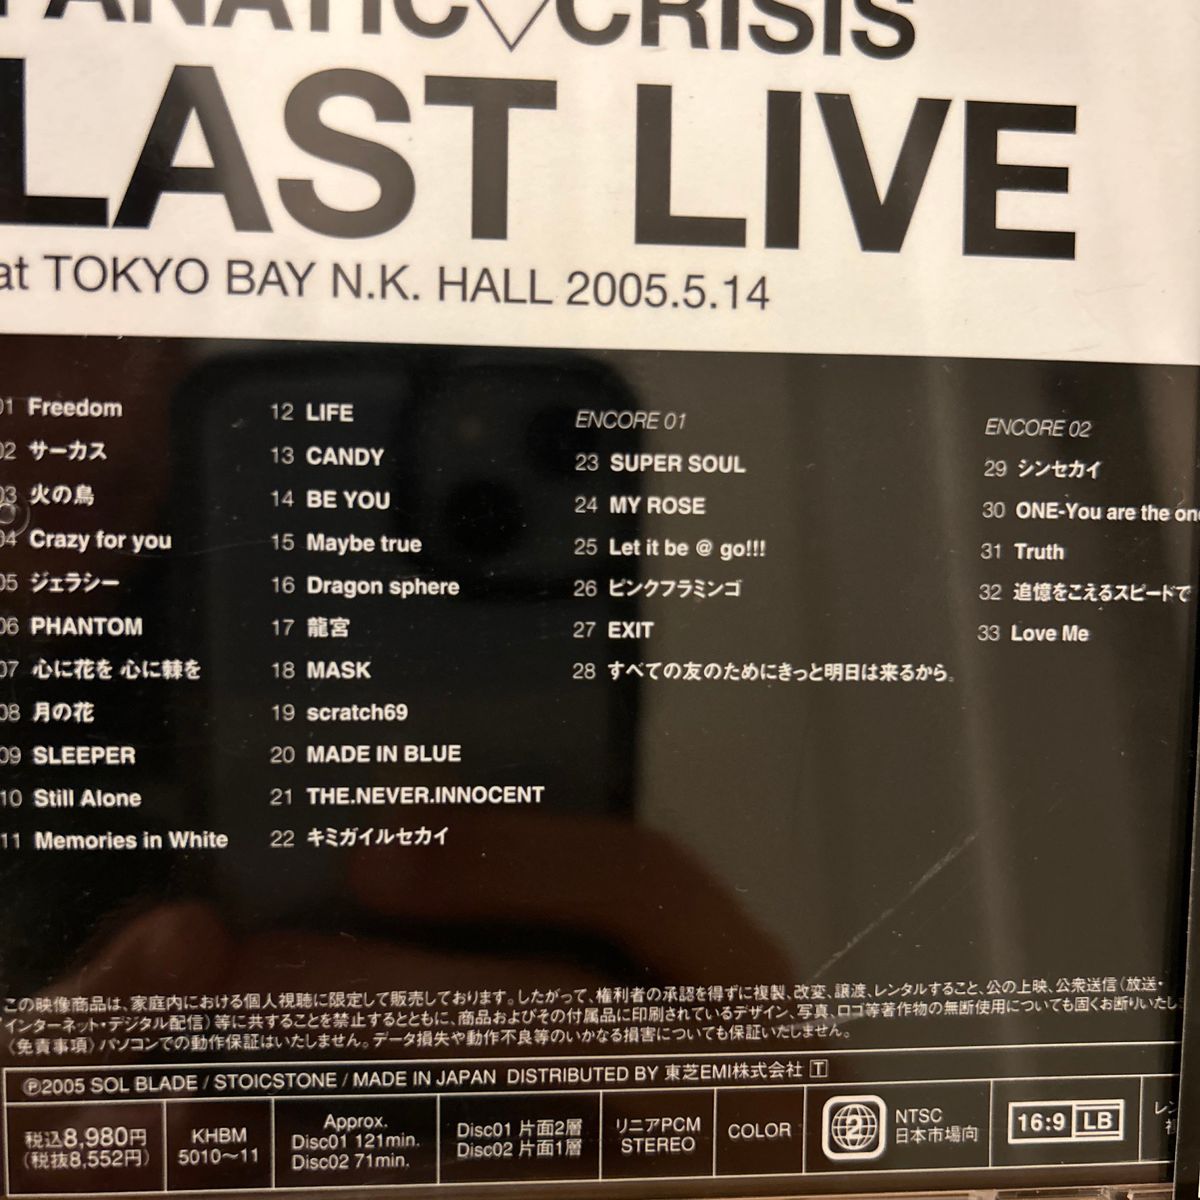  LAST LIVE DVD